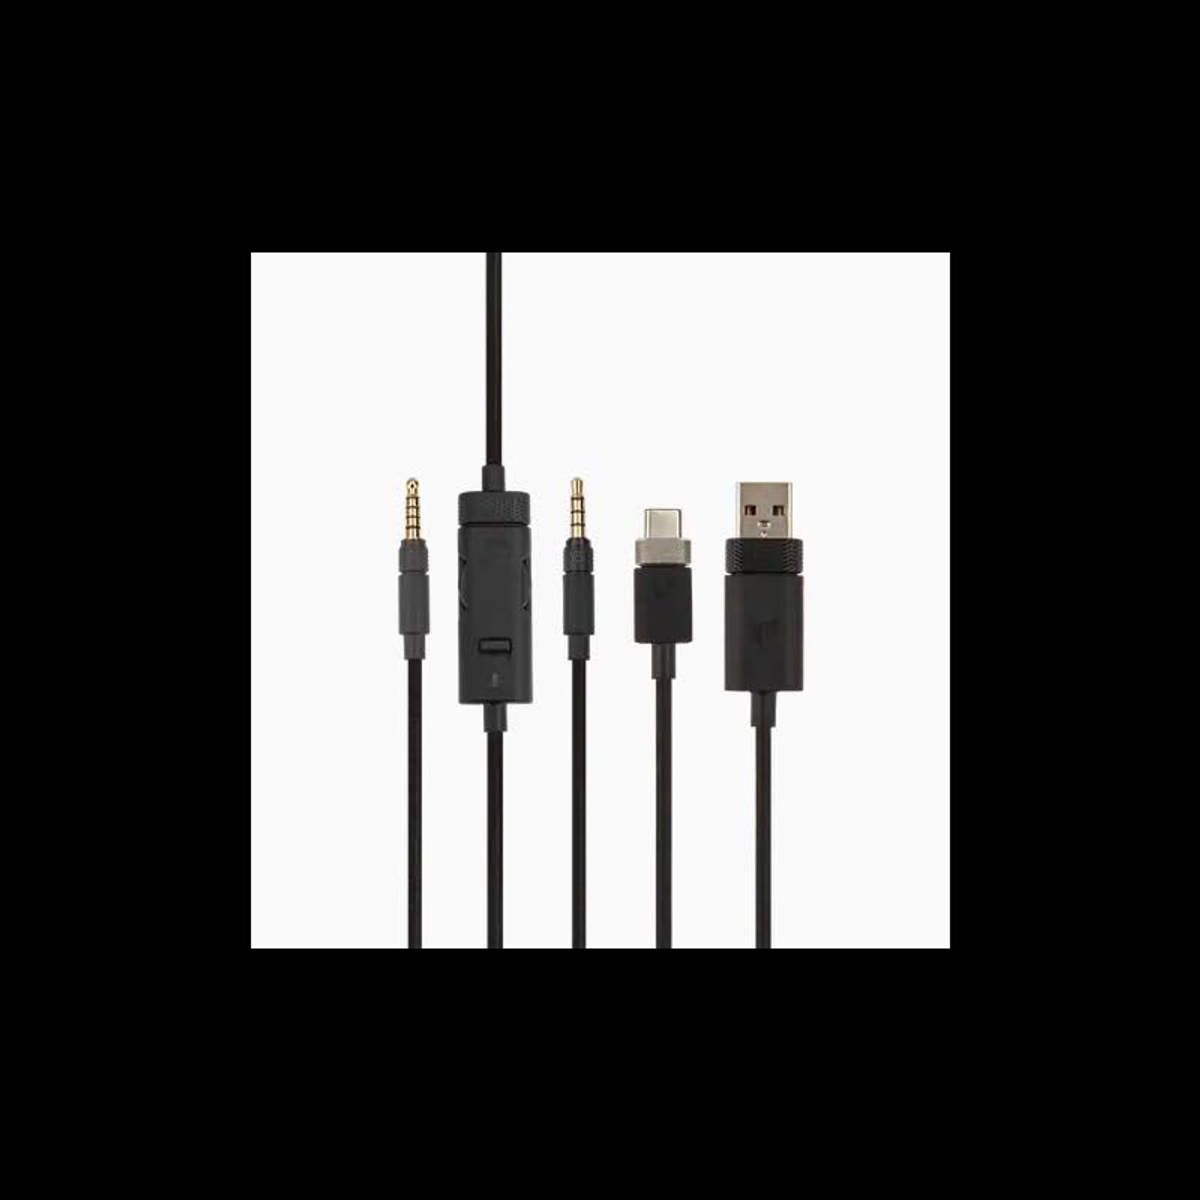 CORSAIR CA-9011188-EU VIRTUOSO Schwarz Bluetooth Headset On-ear RGB XT, WIRELESS